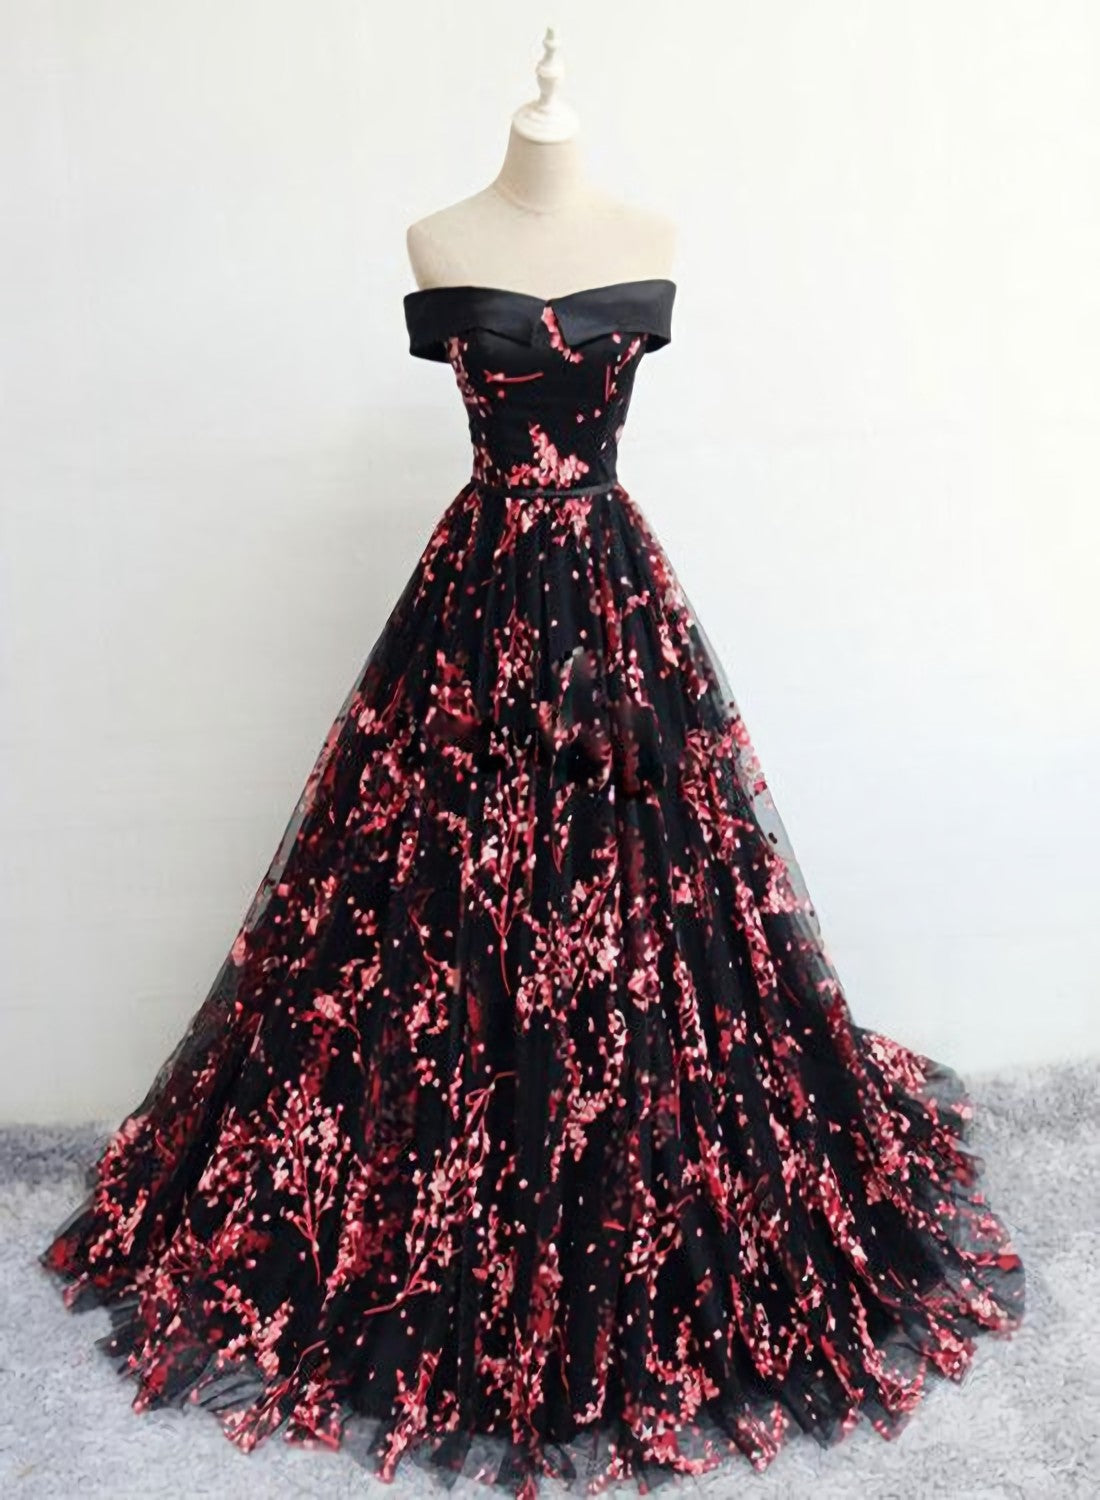 Dressy Outfit, Black Tulle Off Shoulder Flowers Elegant Lace Up Evening Party Gown Black Formal Dress